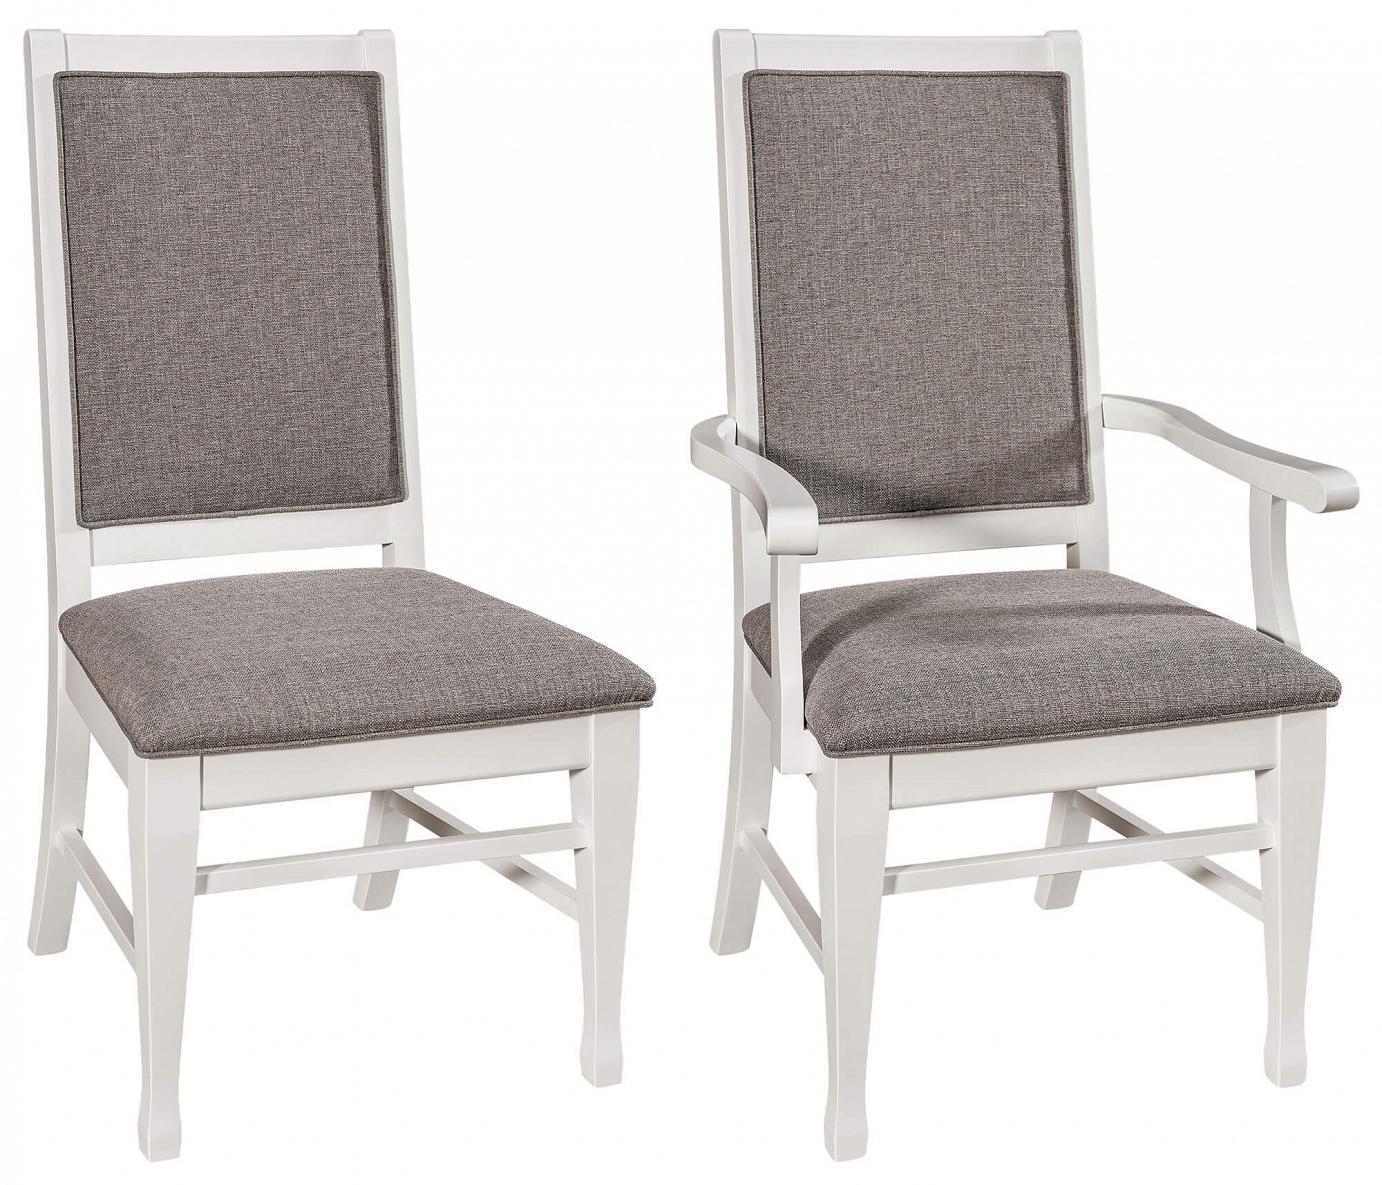 RH Yoder Bilton Chairs